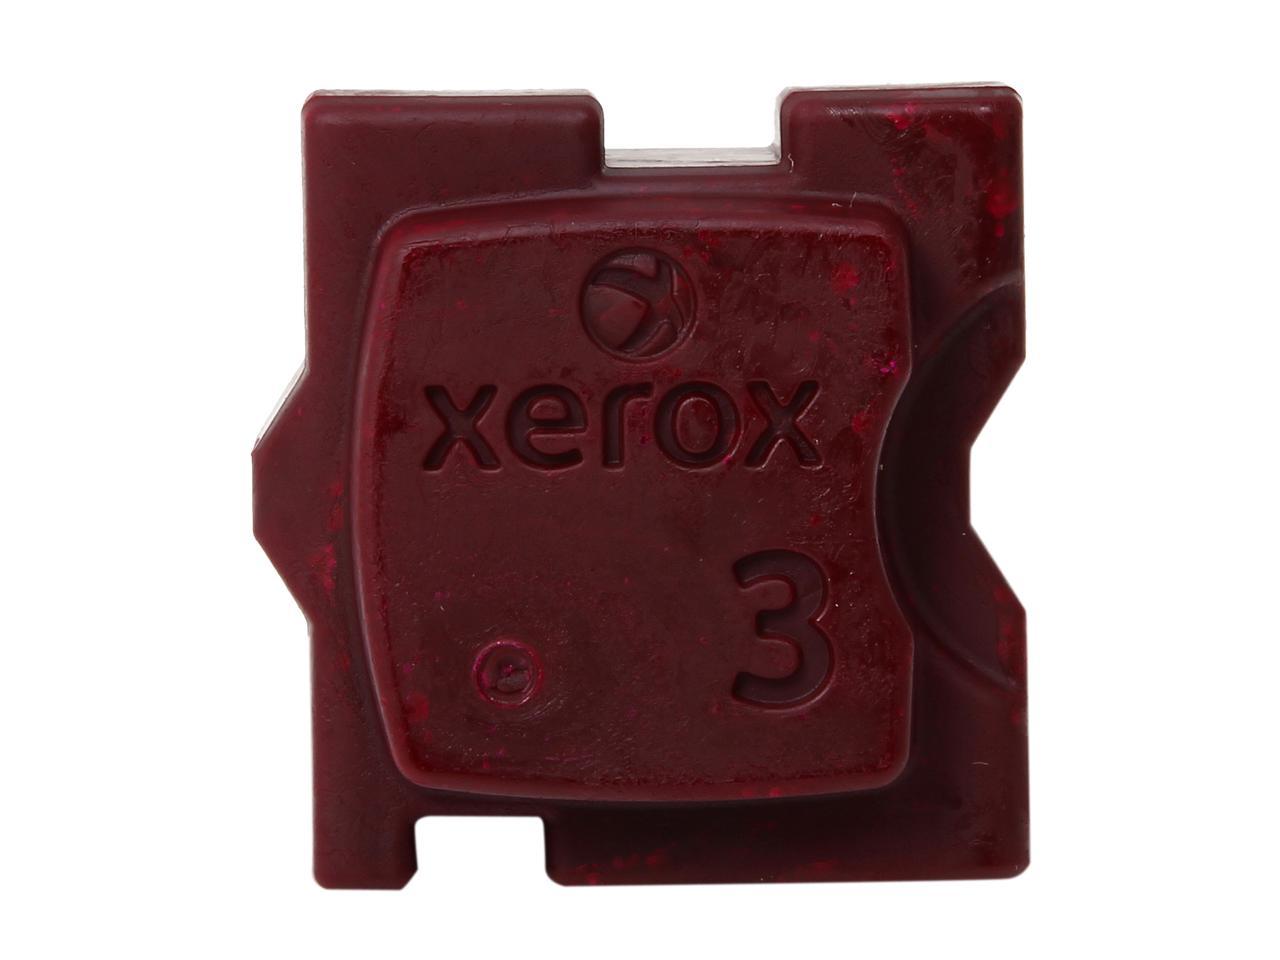 Xerox 108R00991 Solid Ink - 2 Sticks - Magenta